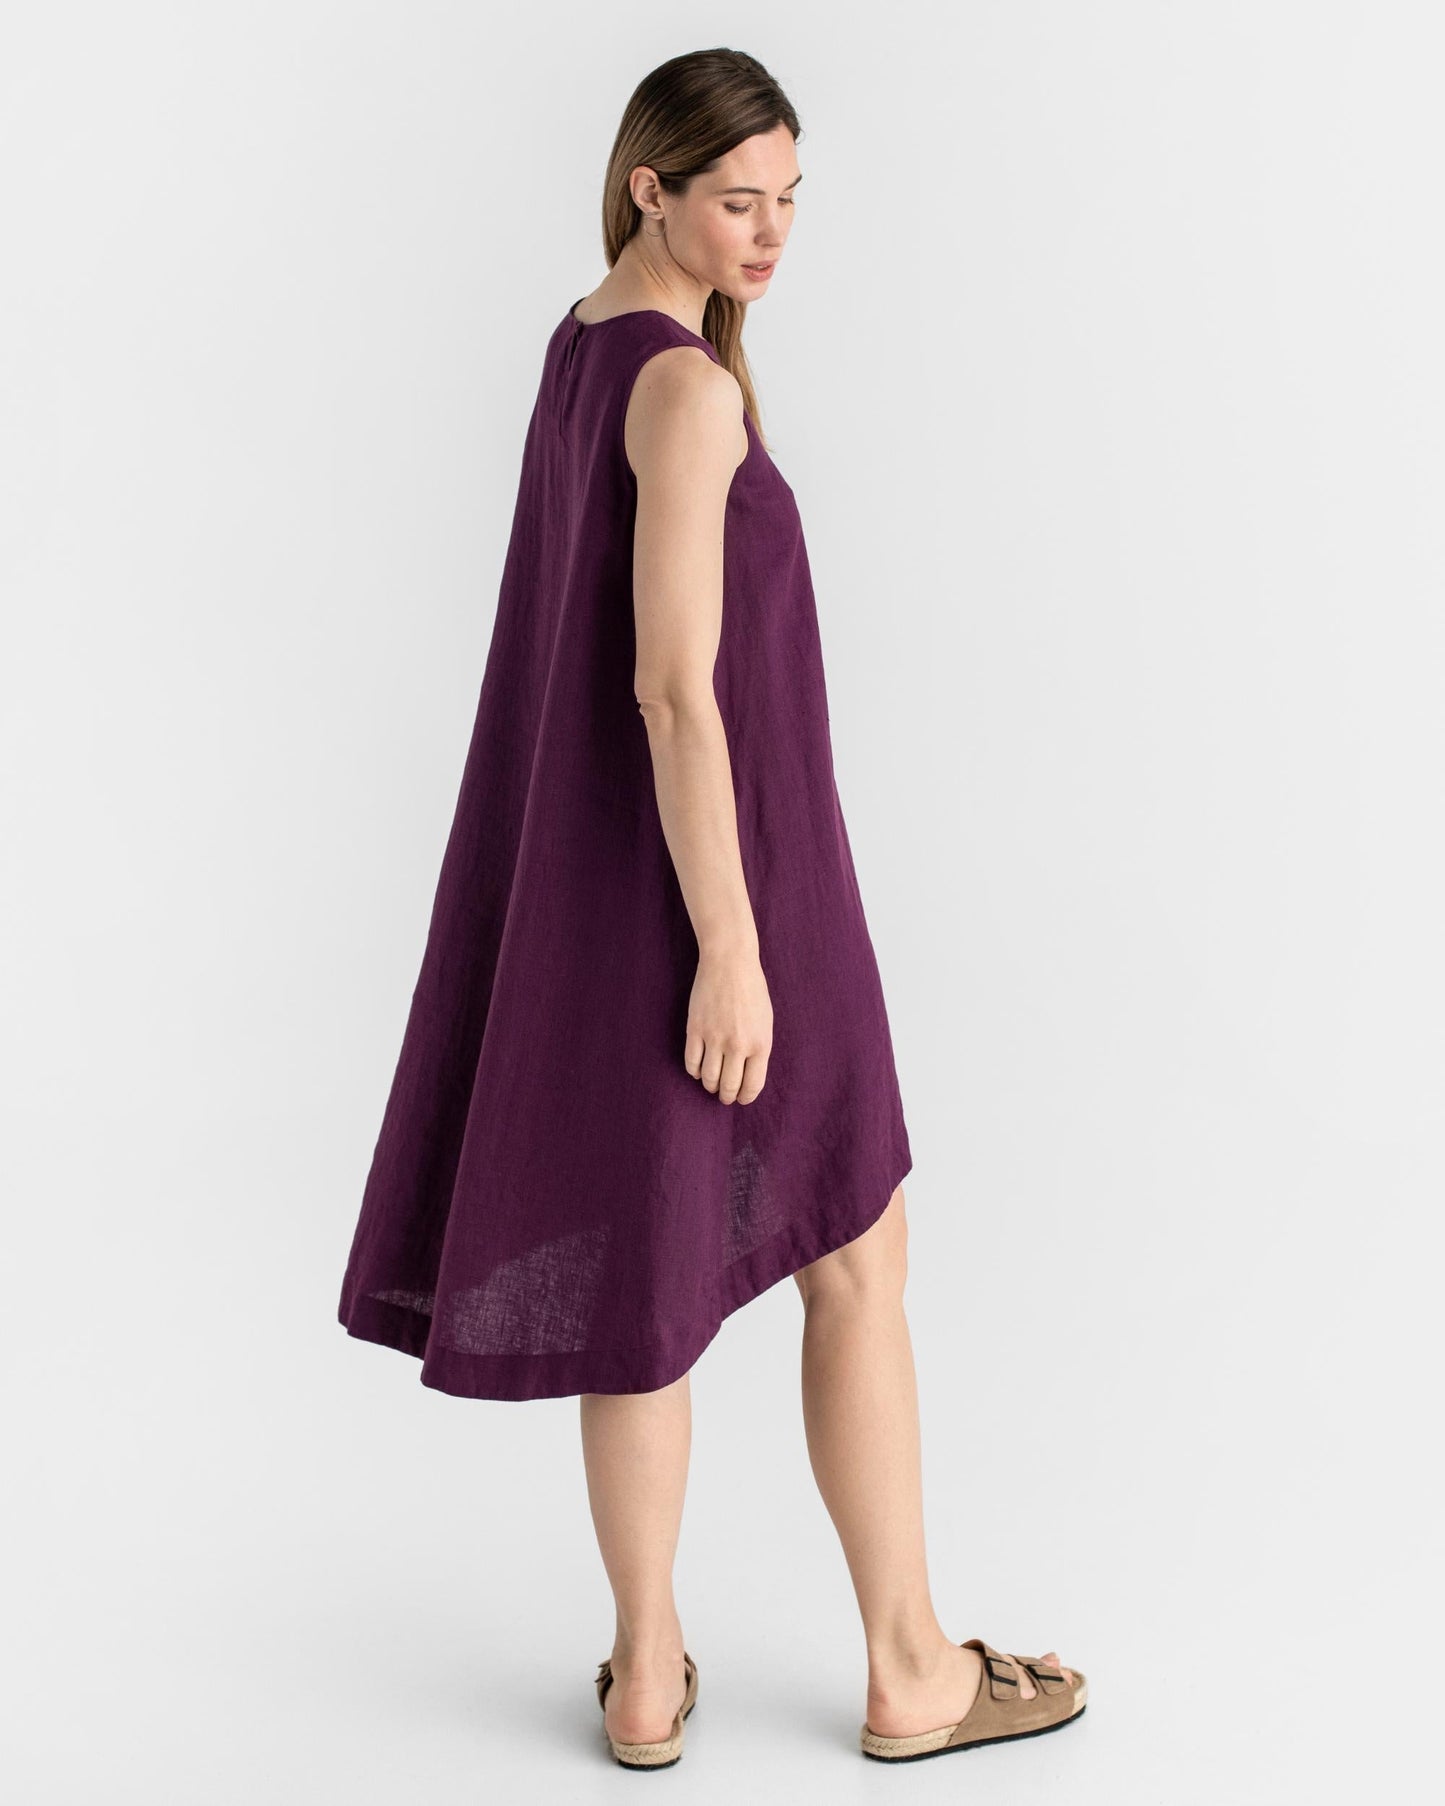 Royal TOSCANA linen dress in Royal purple - MagicLinen